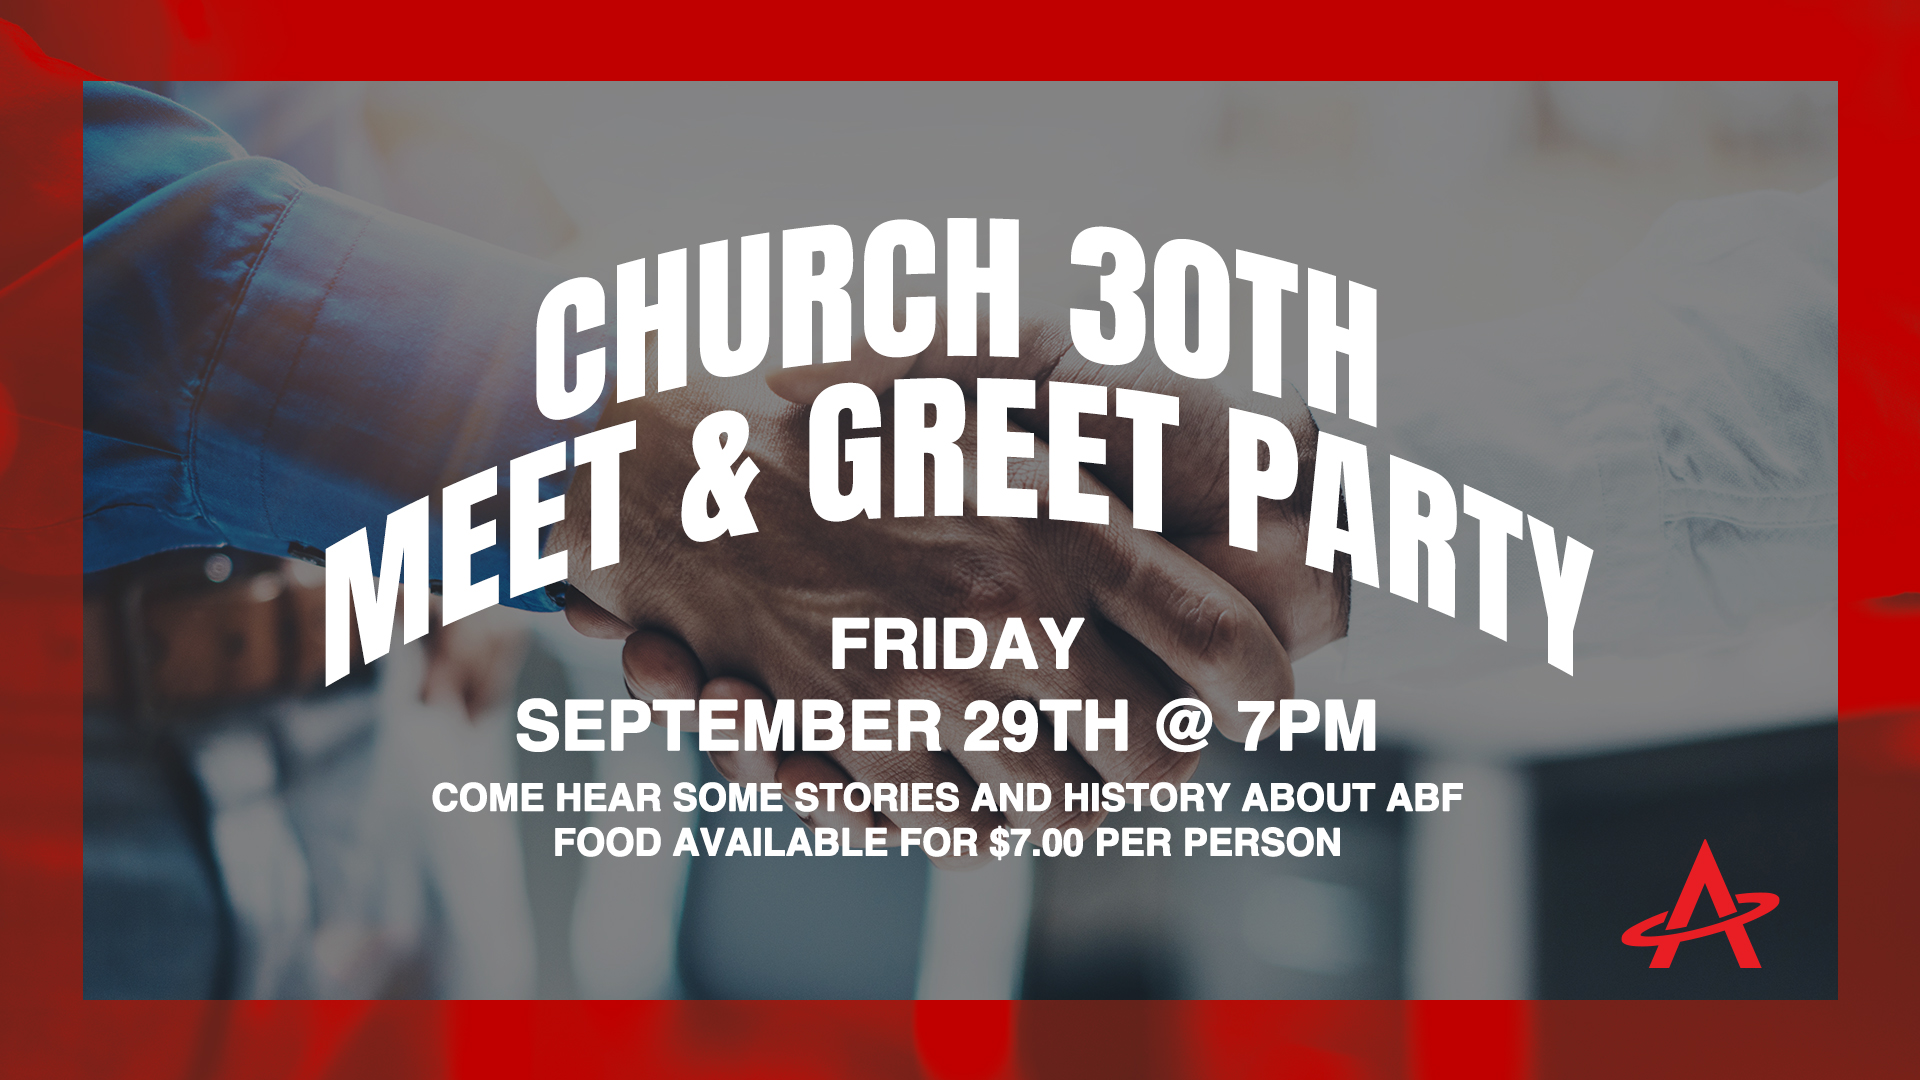 church-30th-meet-greet-party-wide-copy